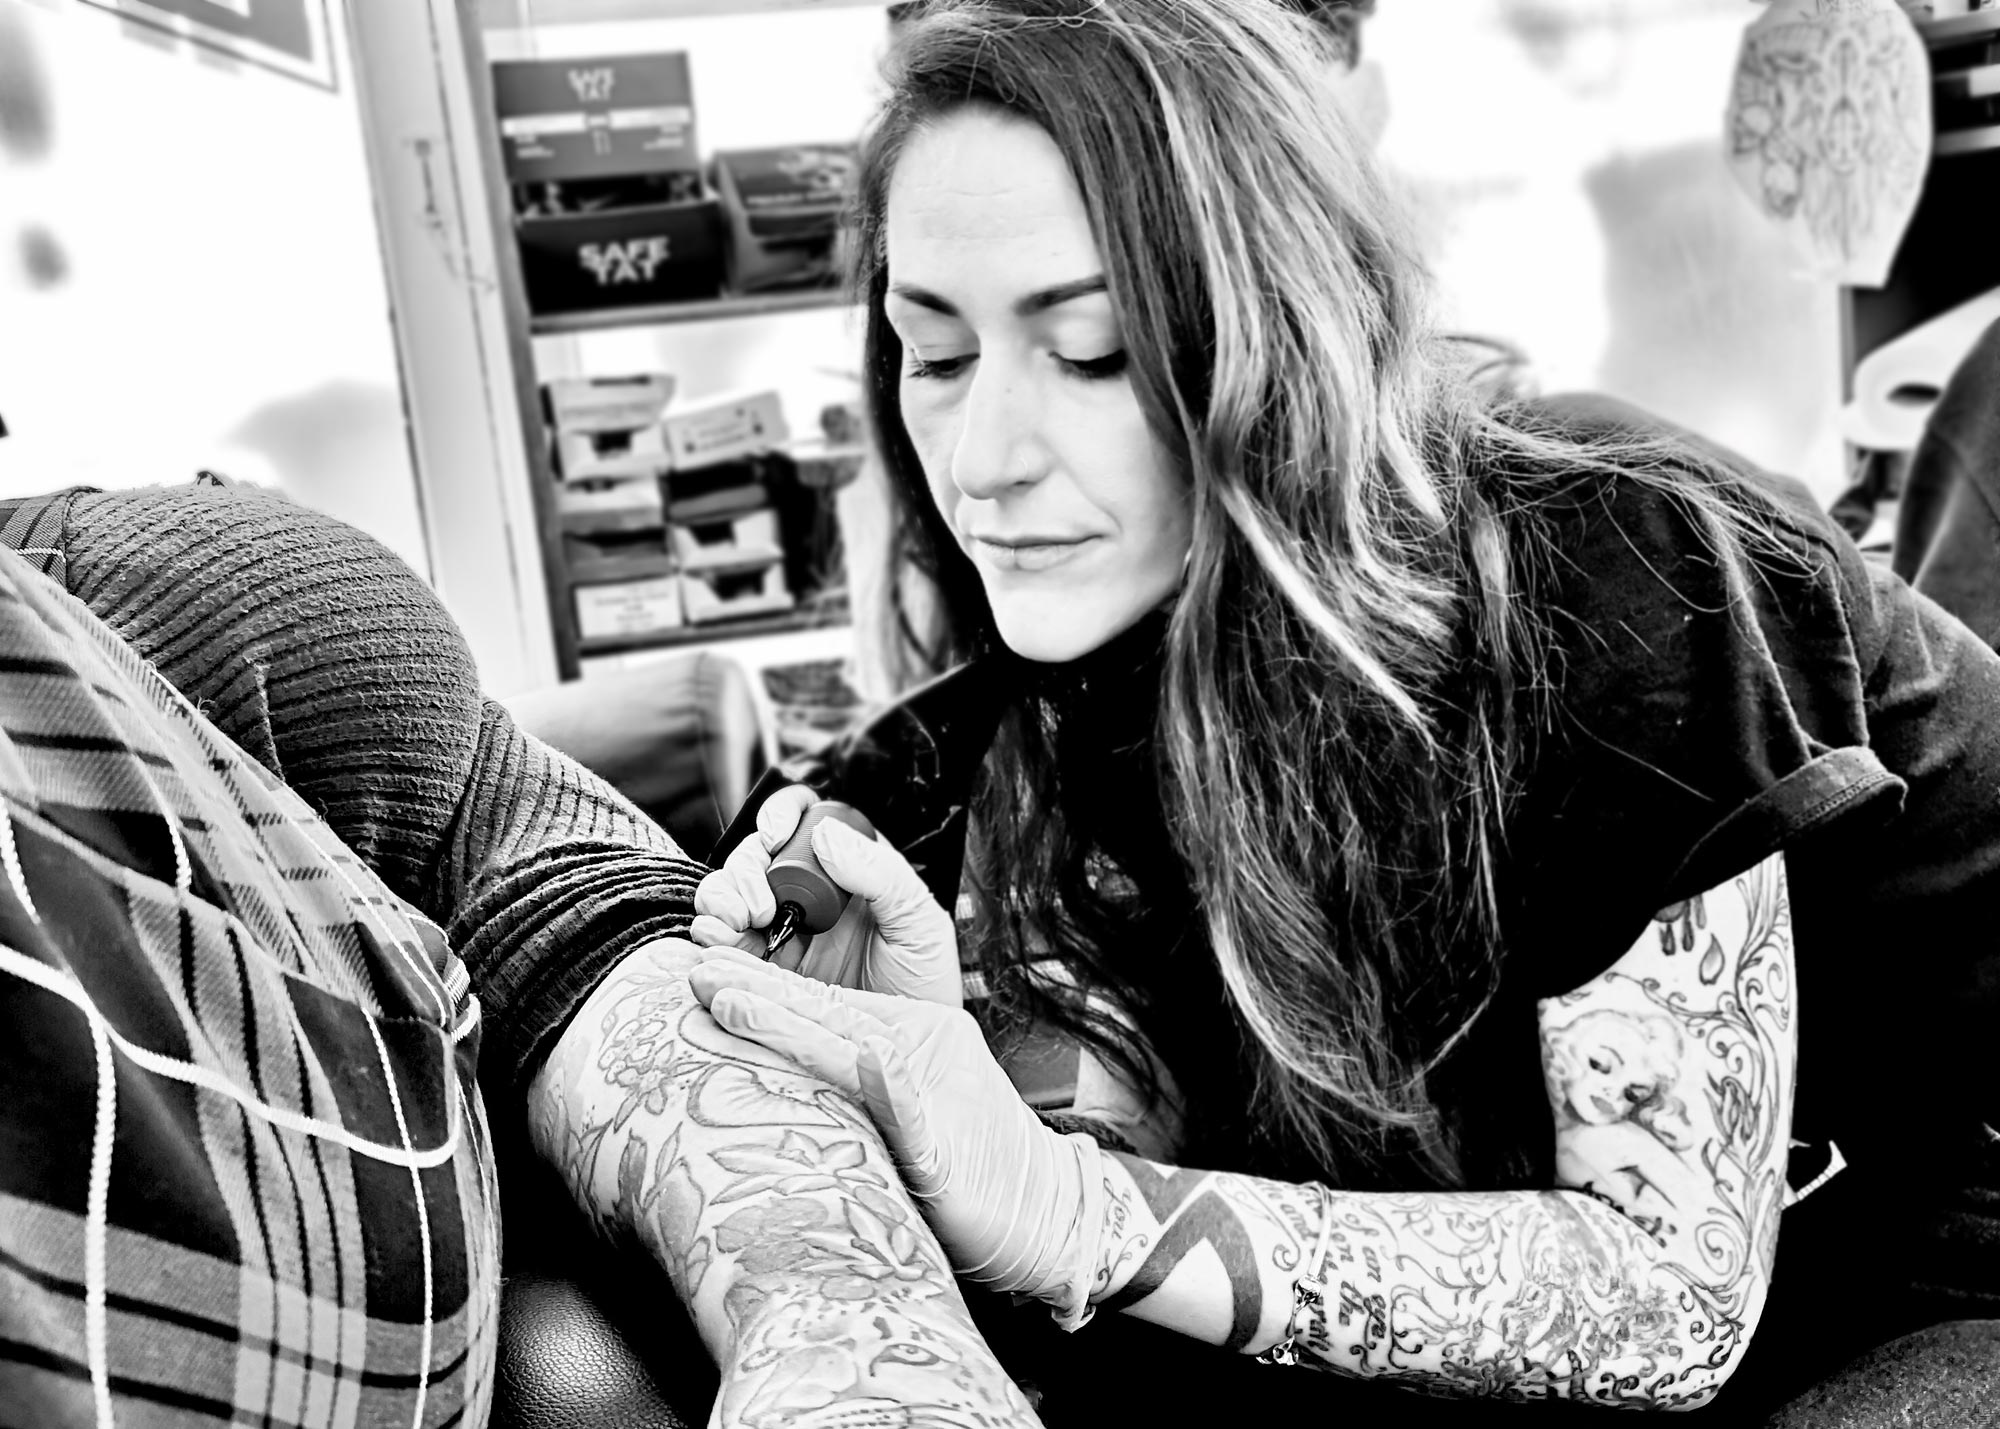 Realism Design your Tattoo - Custom Tattoo Design Services | Upwork